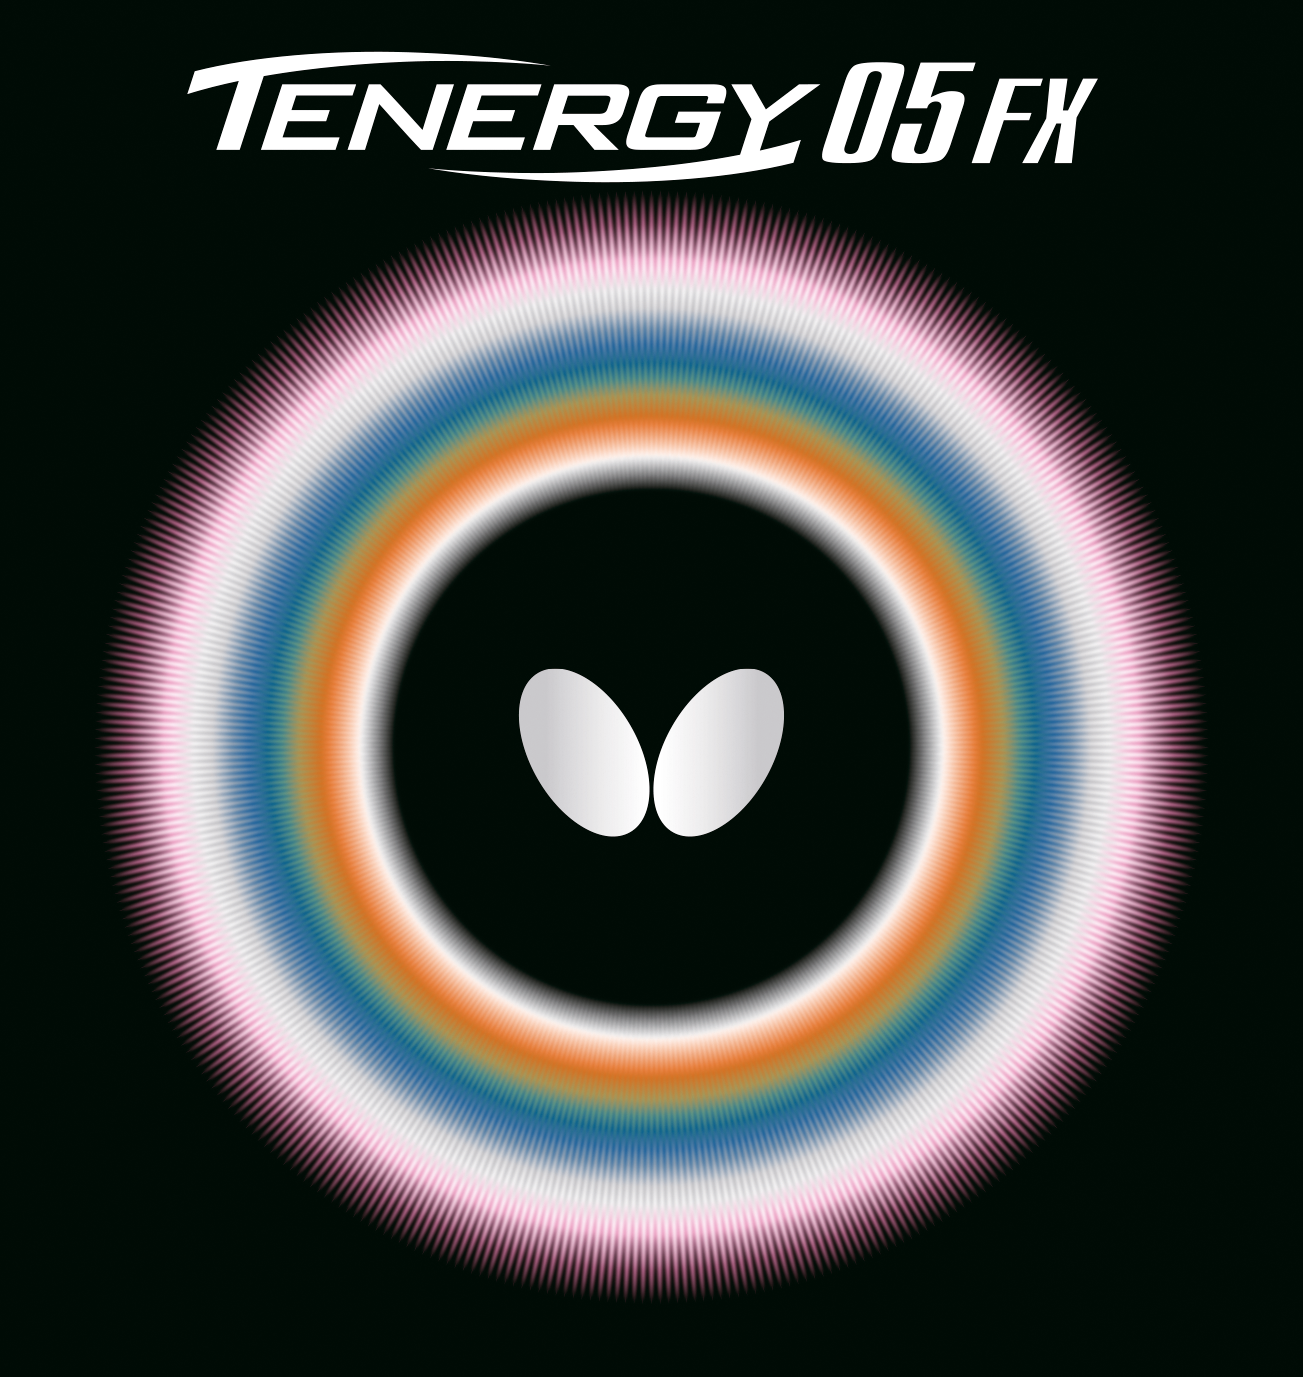 Butterfly- Tenergy 05 FX